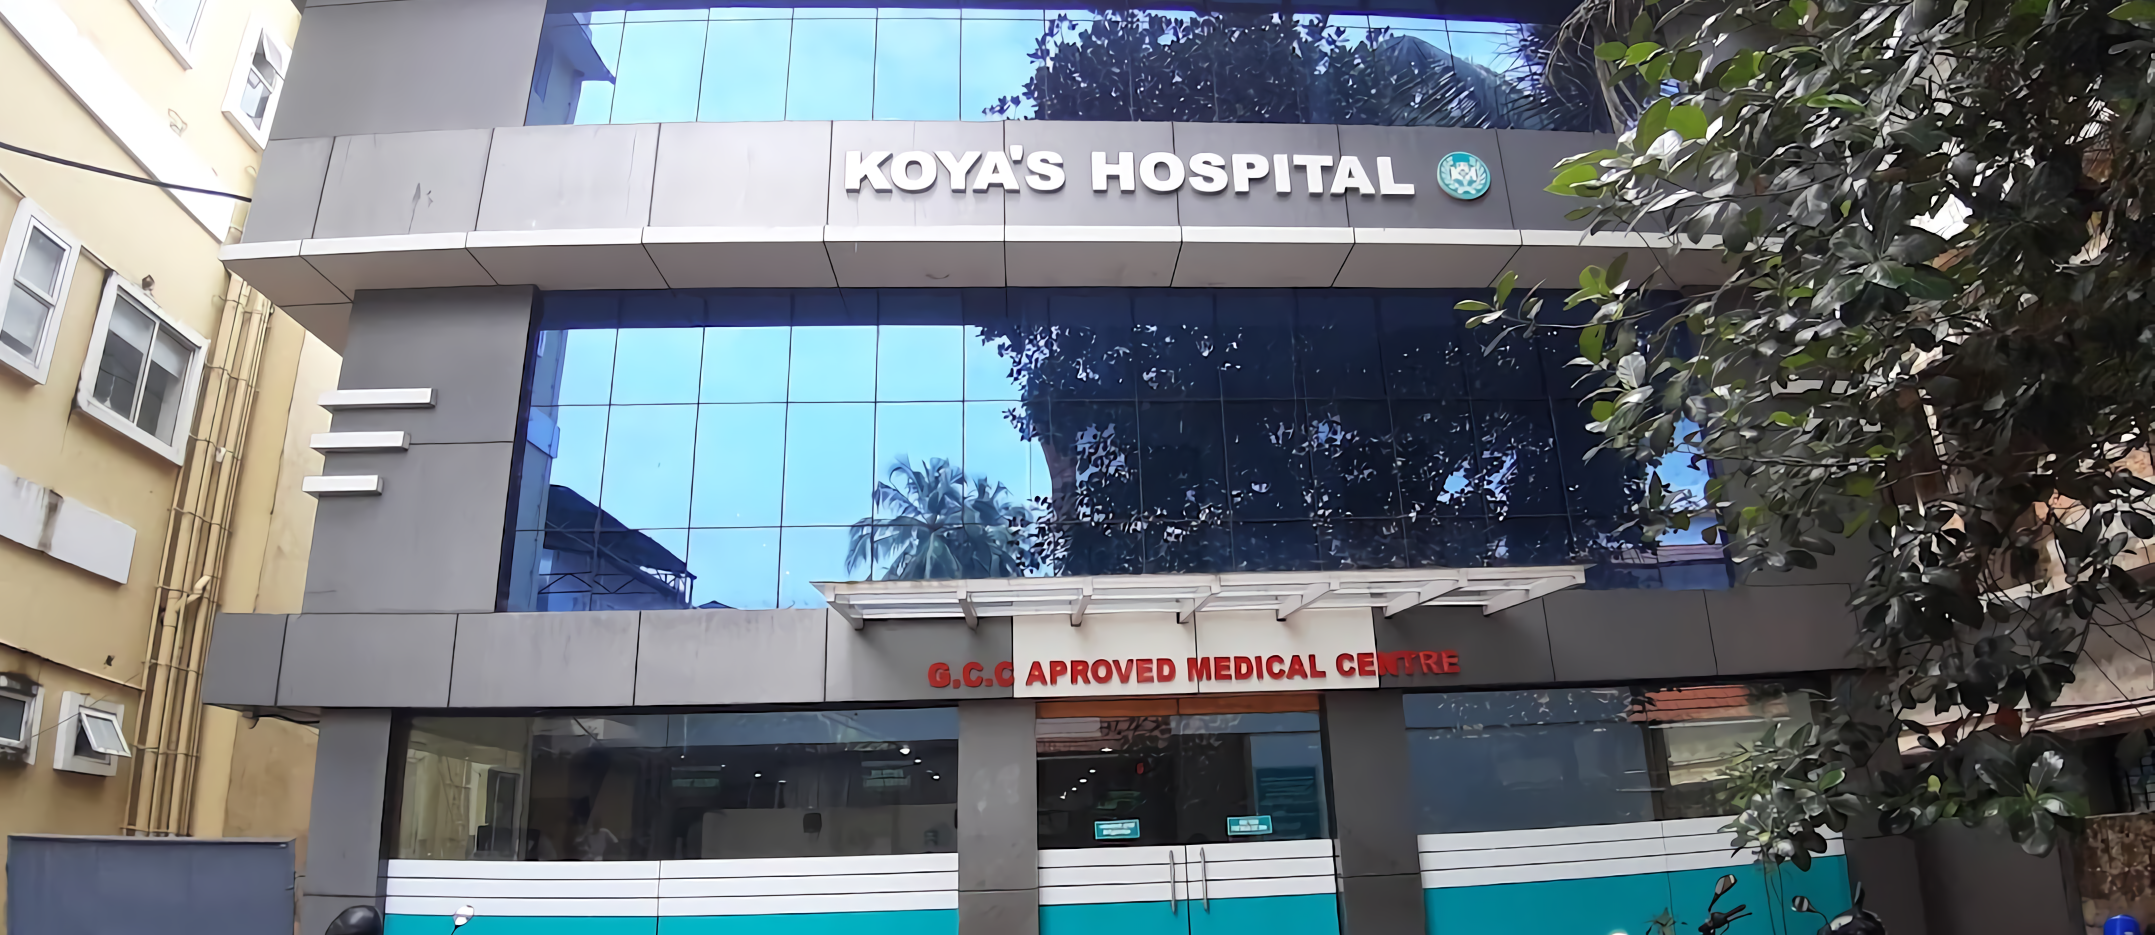 Koya's Hospital